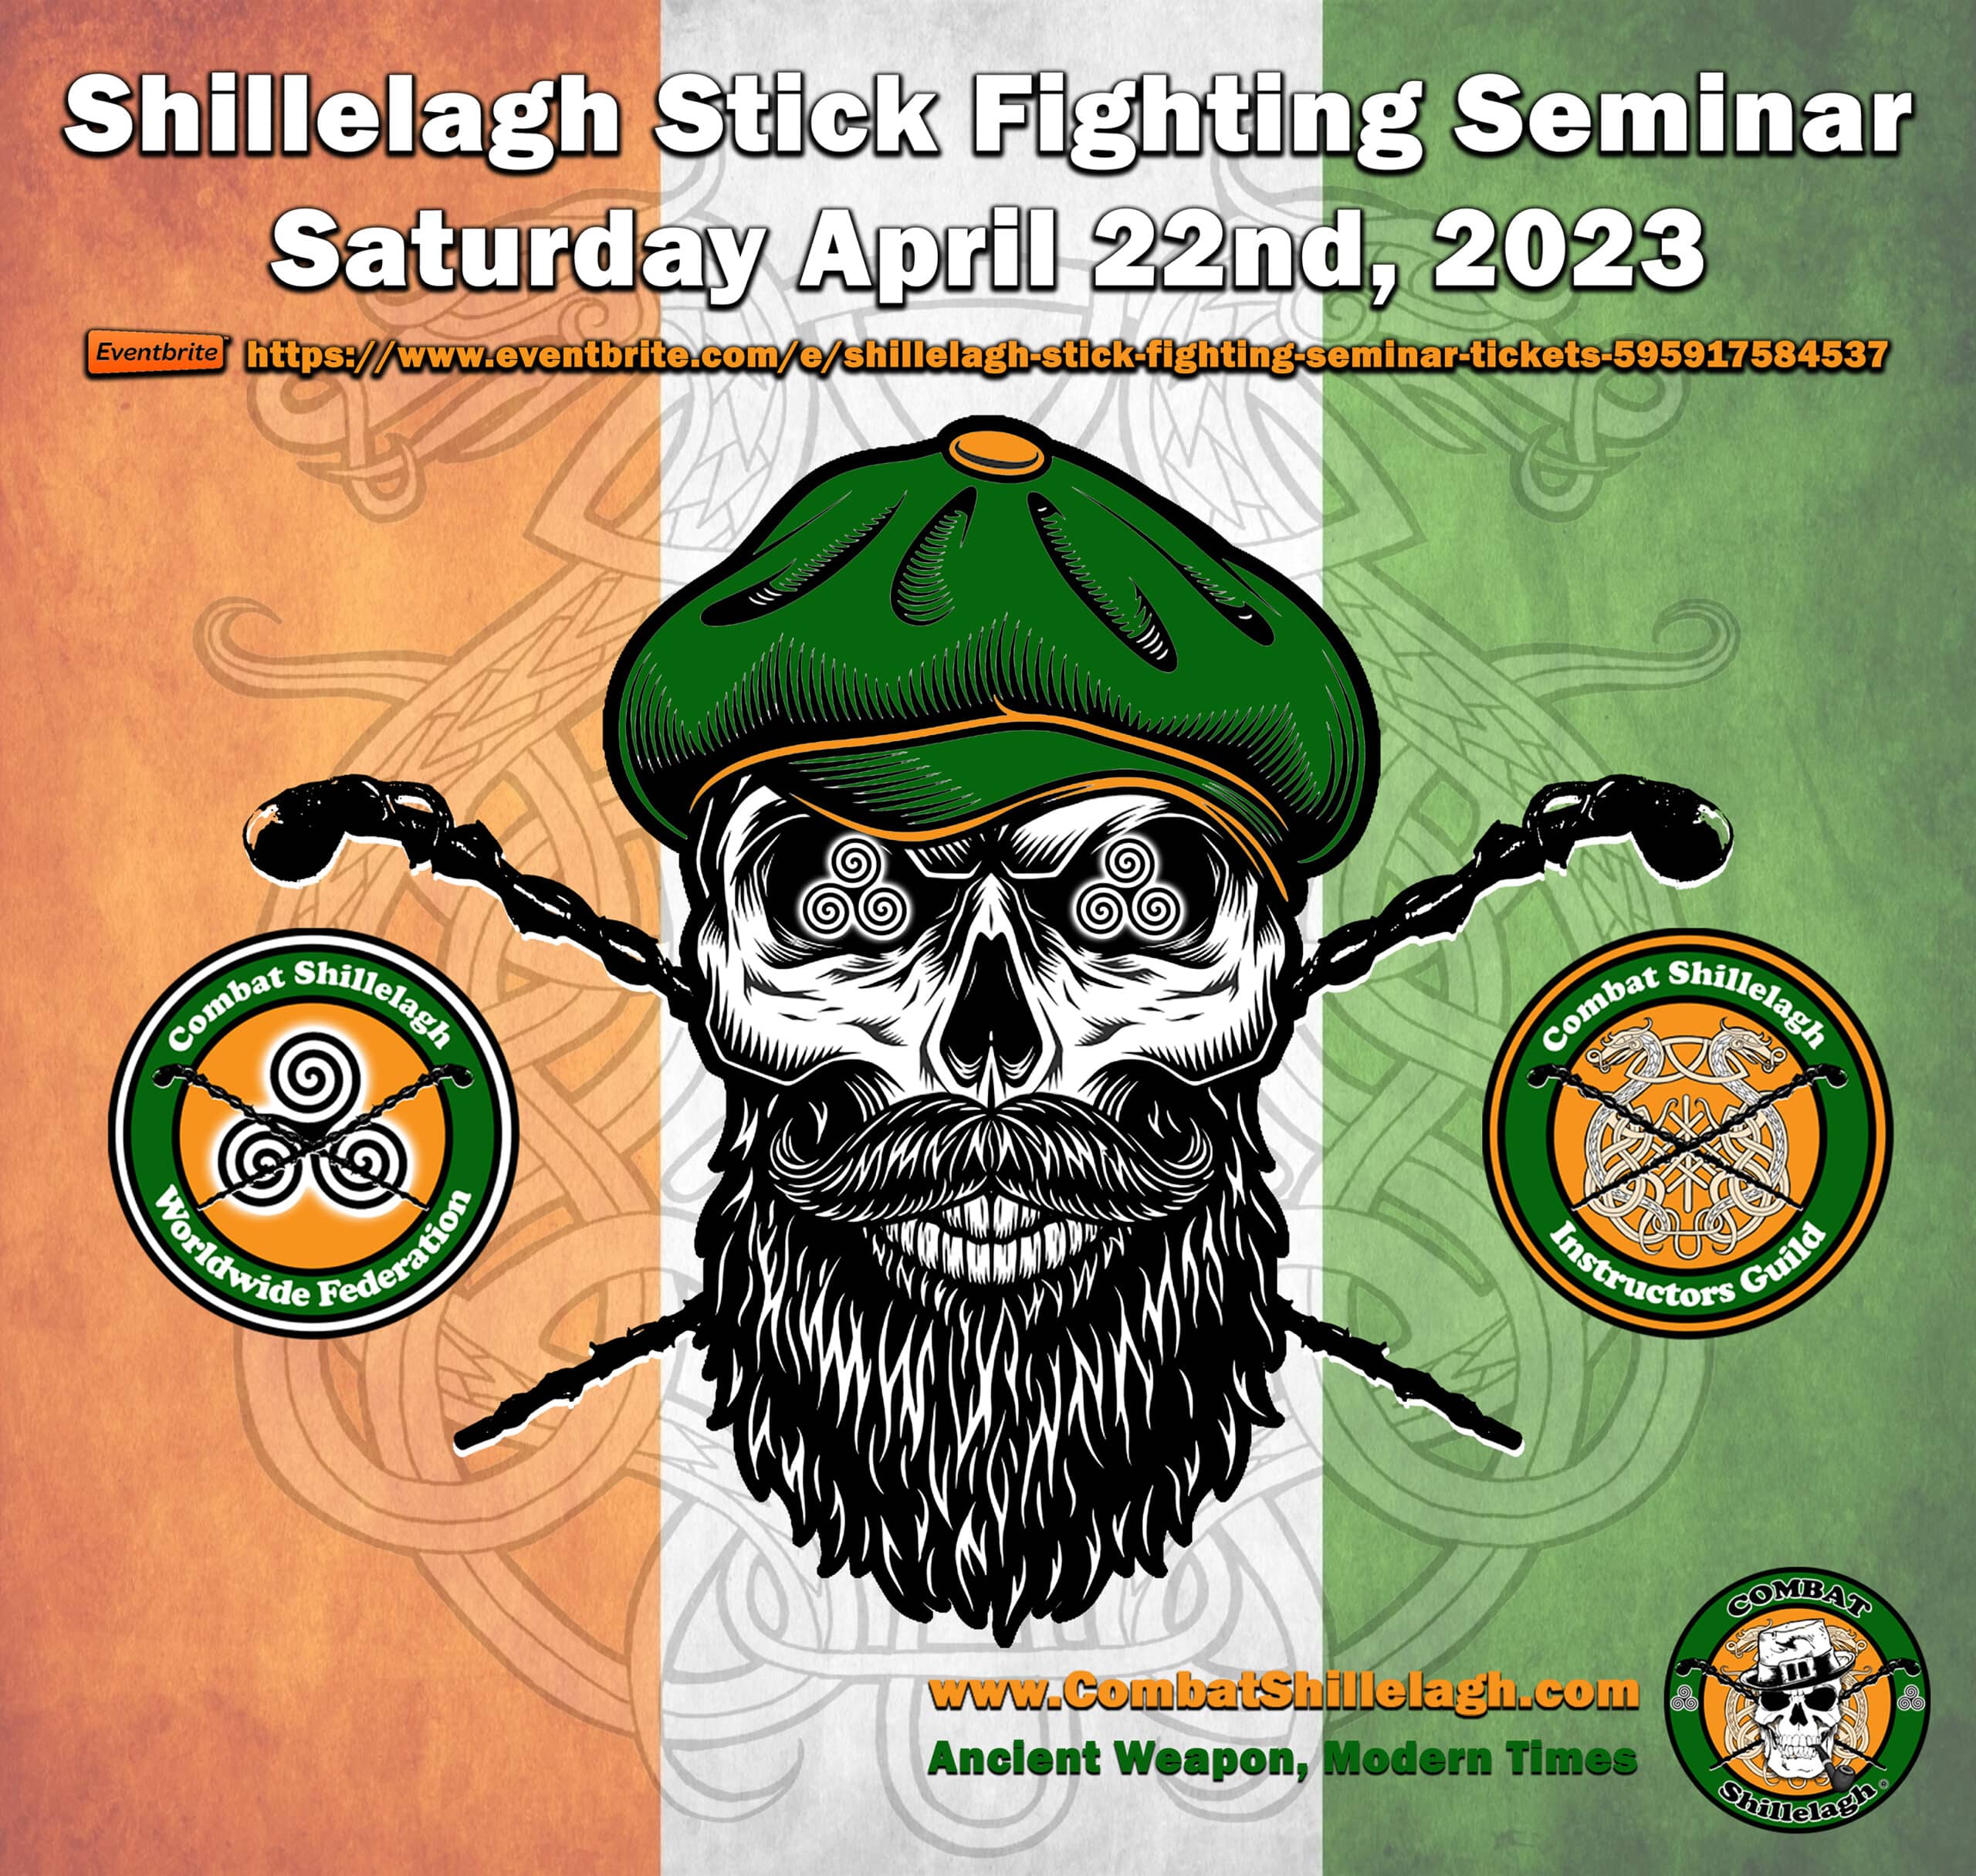 Combat Shillelagh Events